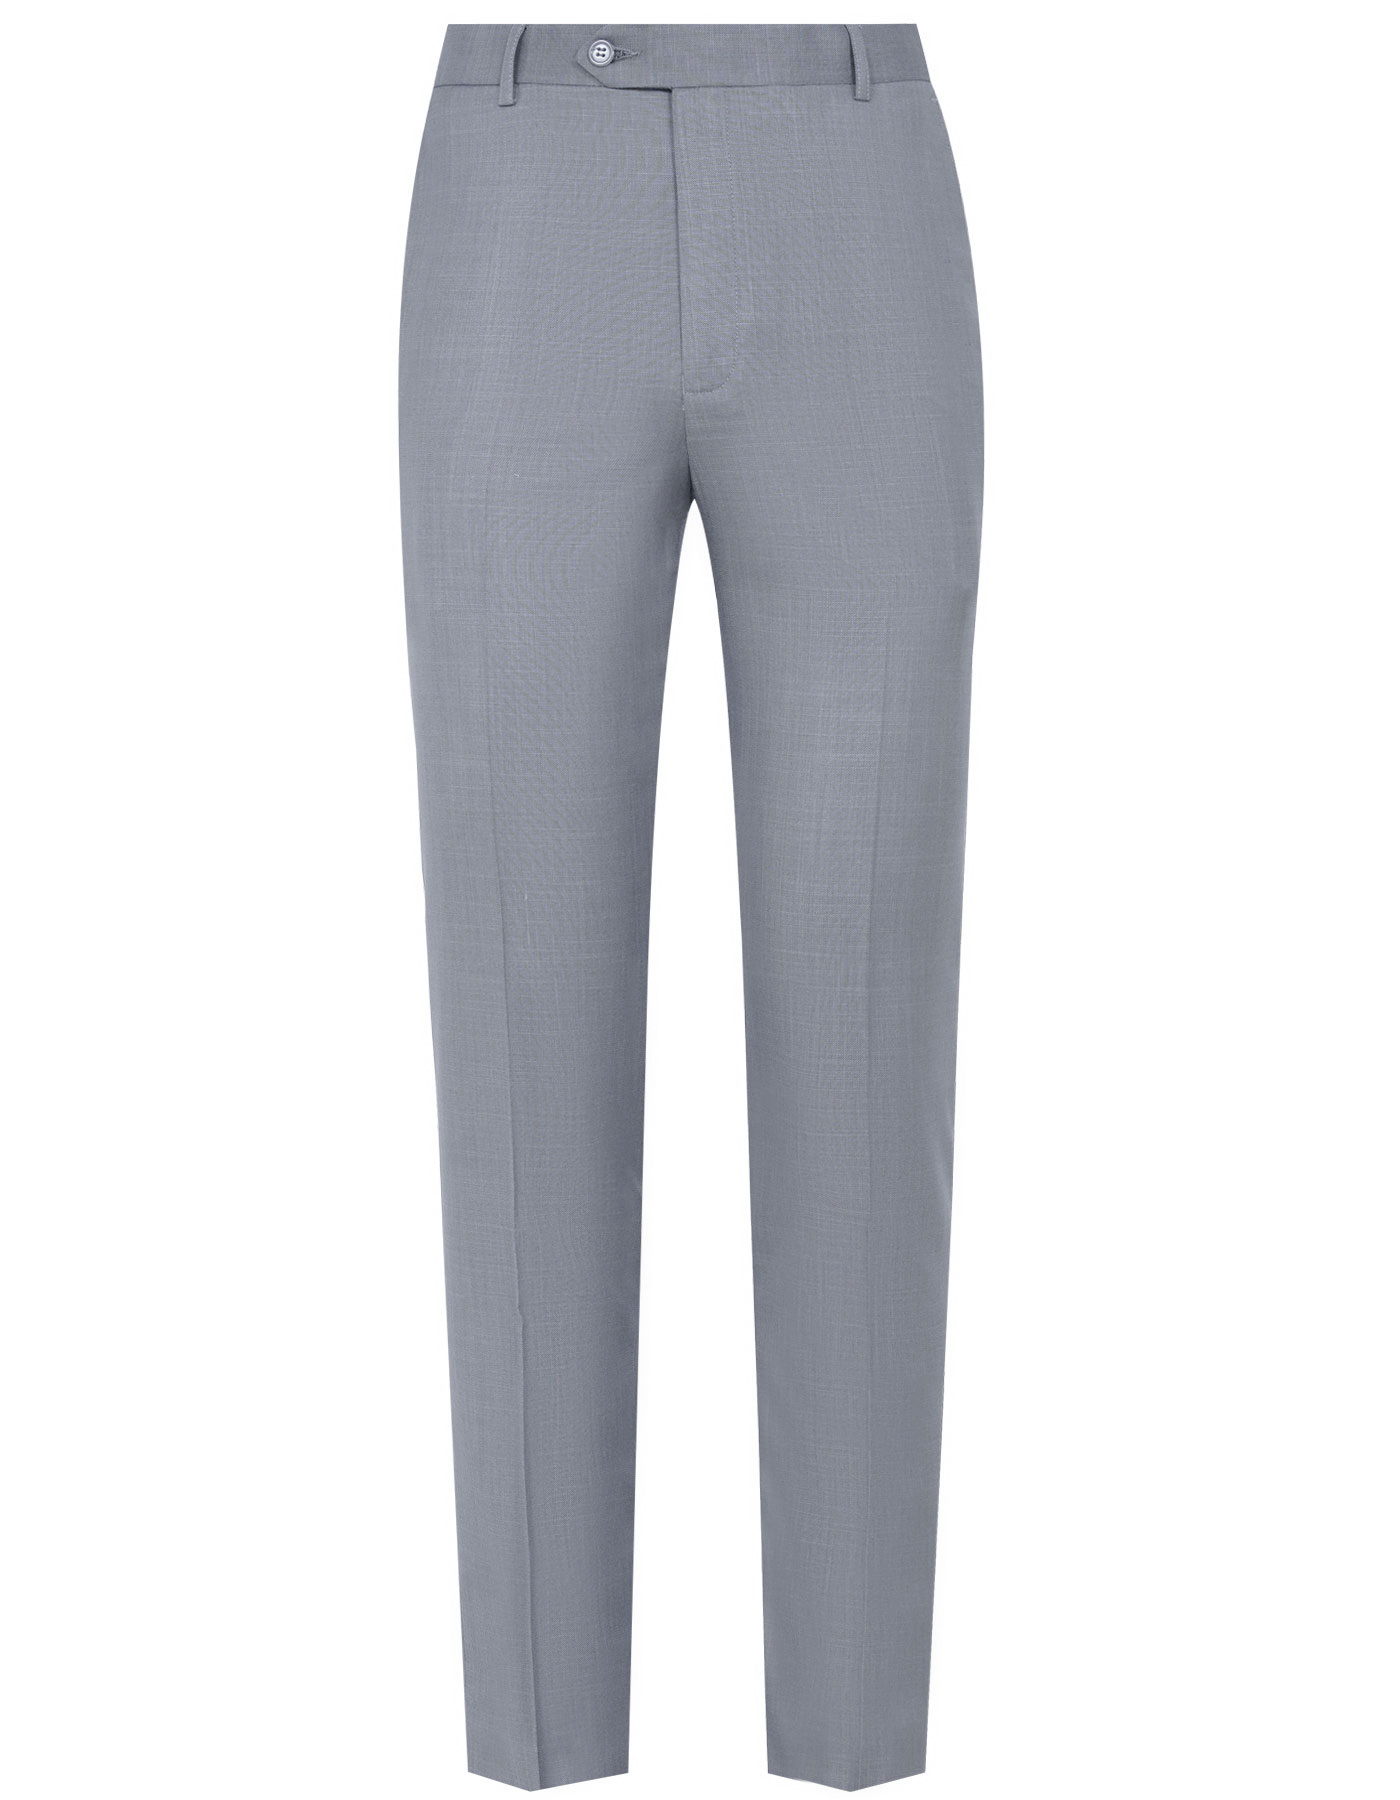 Formal Trouser M Grey 30 FT368S Uniworth TF368